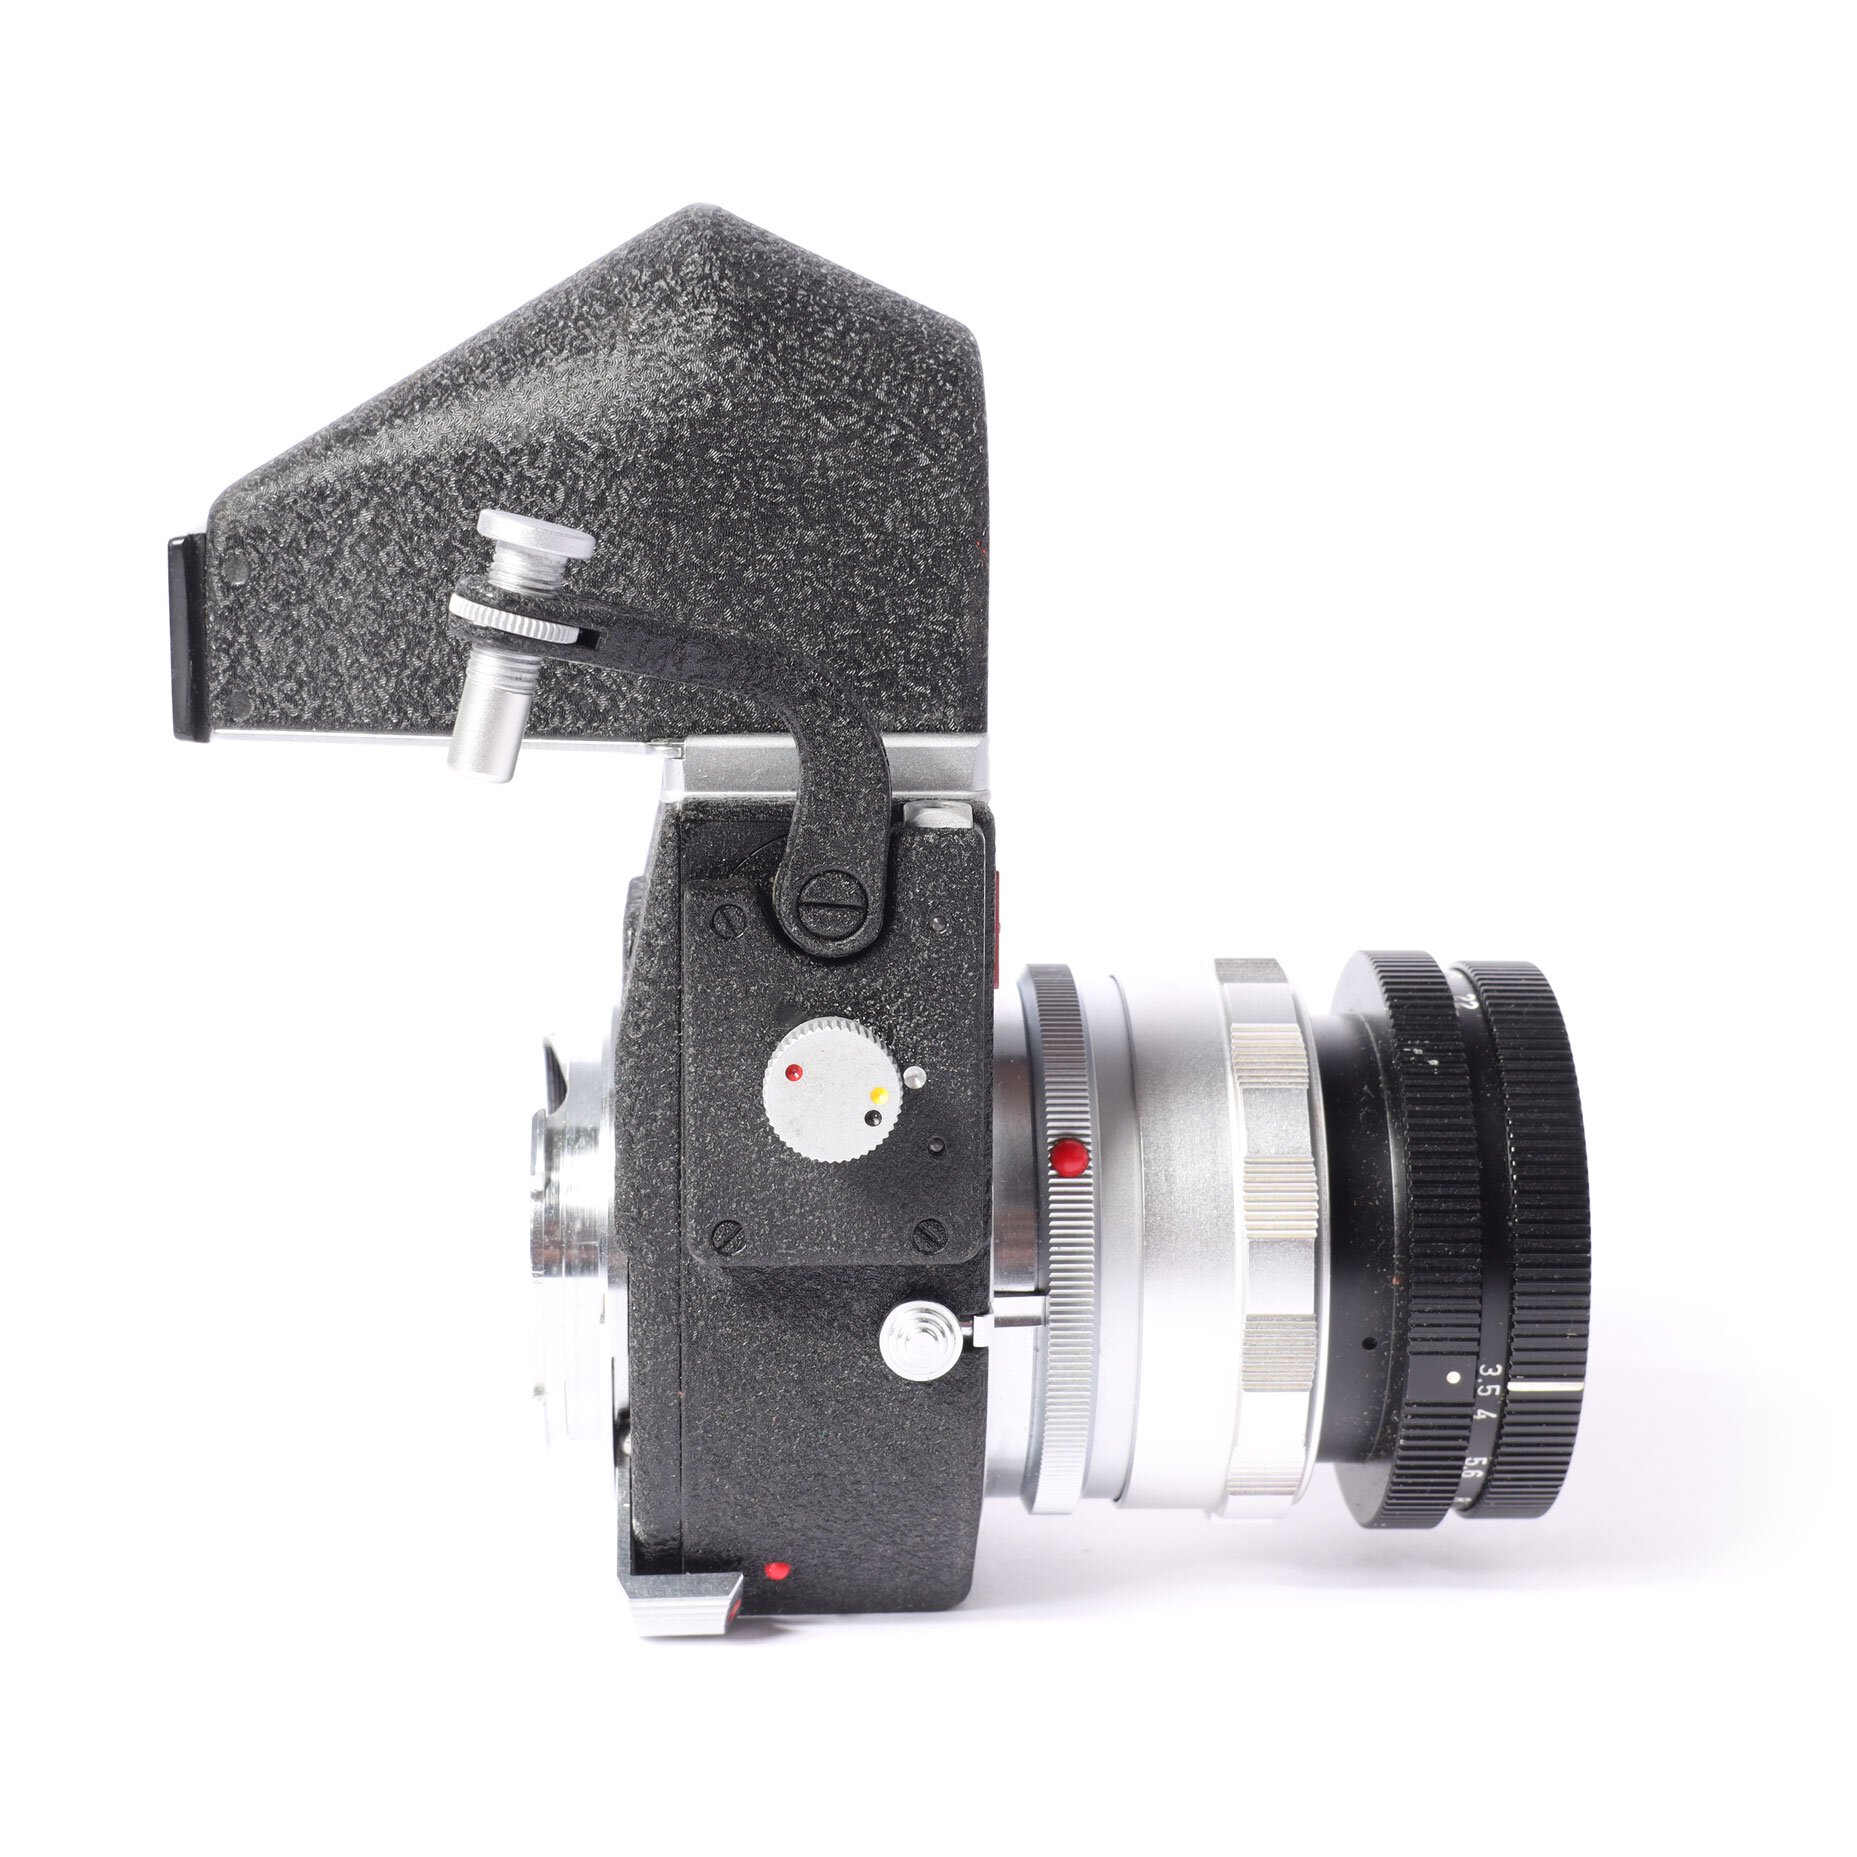 Leitz Leica M Elmar 3.5/65mm Visoflex